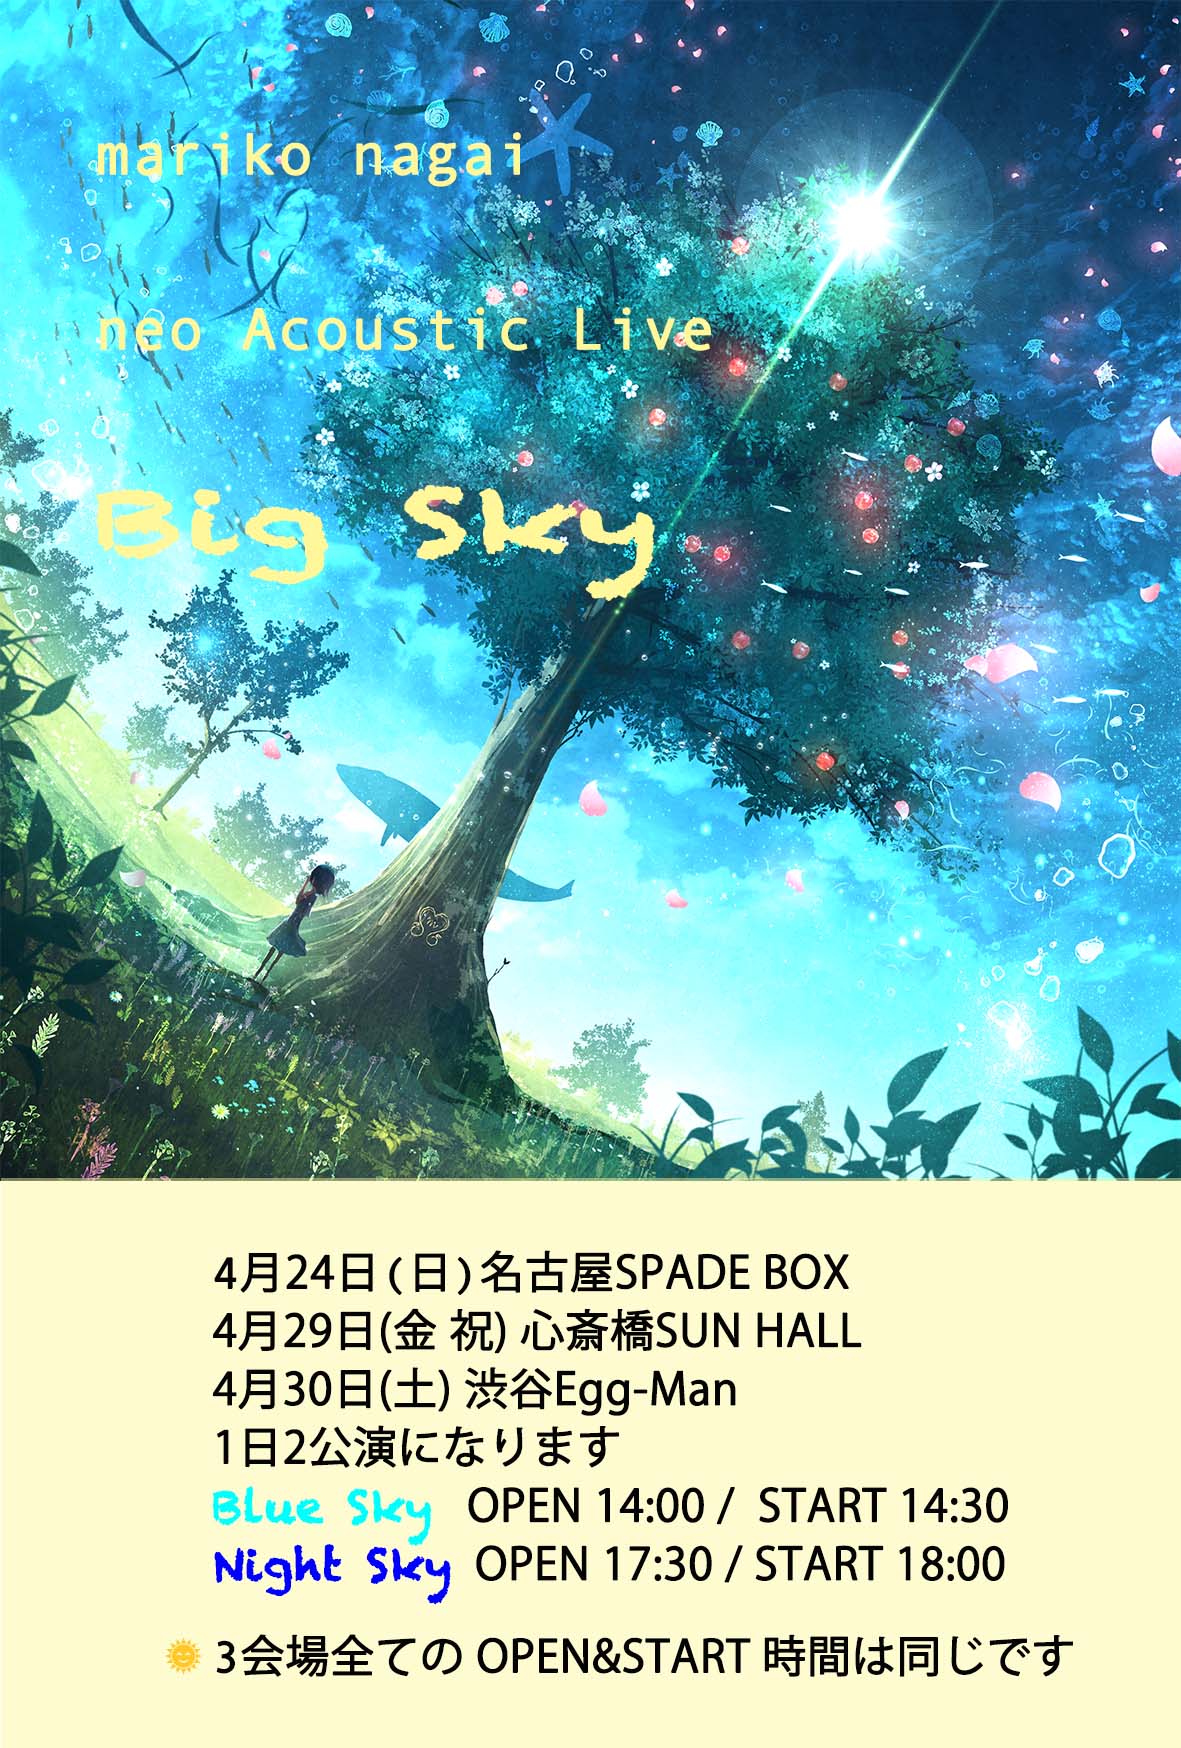 永井真理子 Big Sky~ neo Acoustic Live~「Blue Sky」